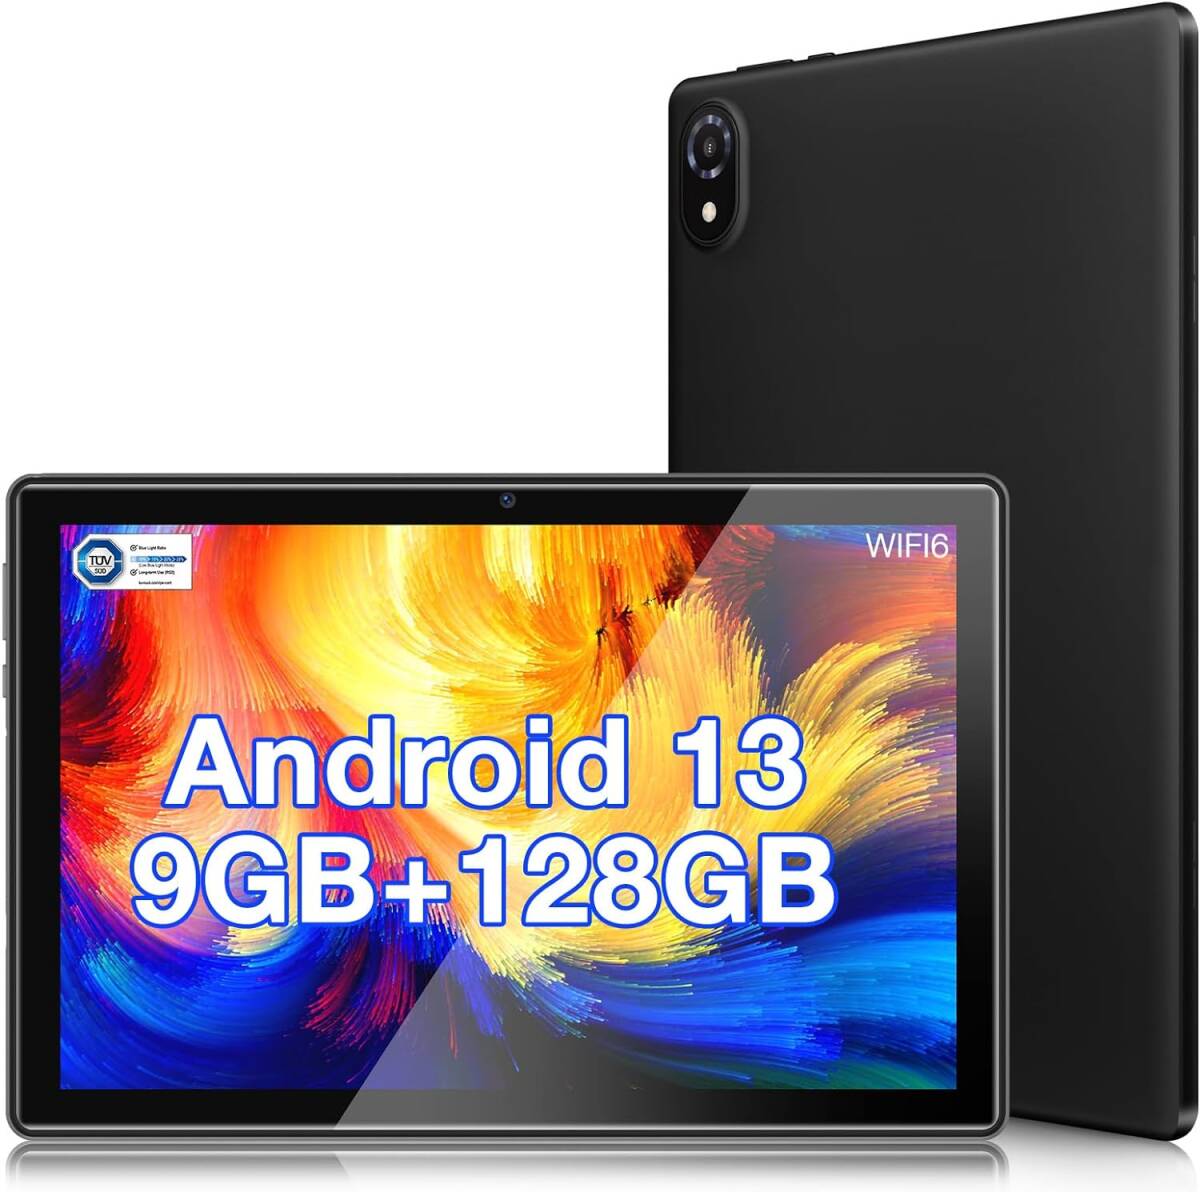 Android 13 タブレット 10インチ wi-fiモデル 専用ケース付属_画像1